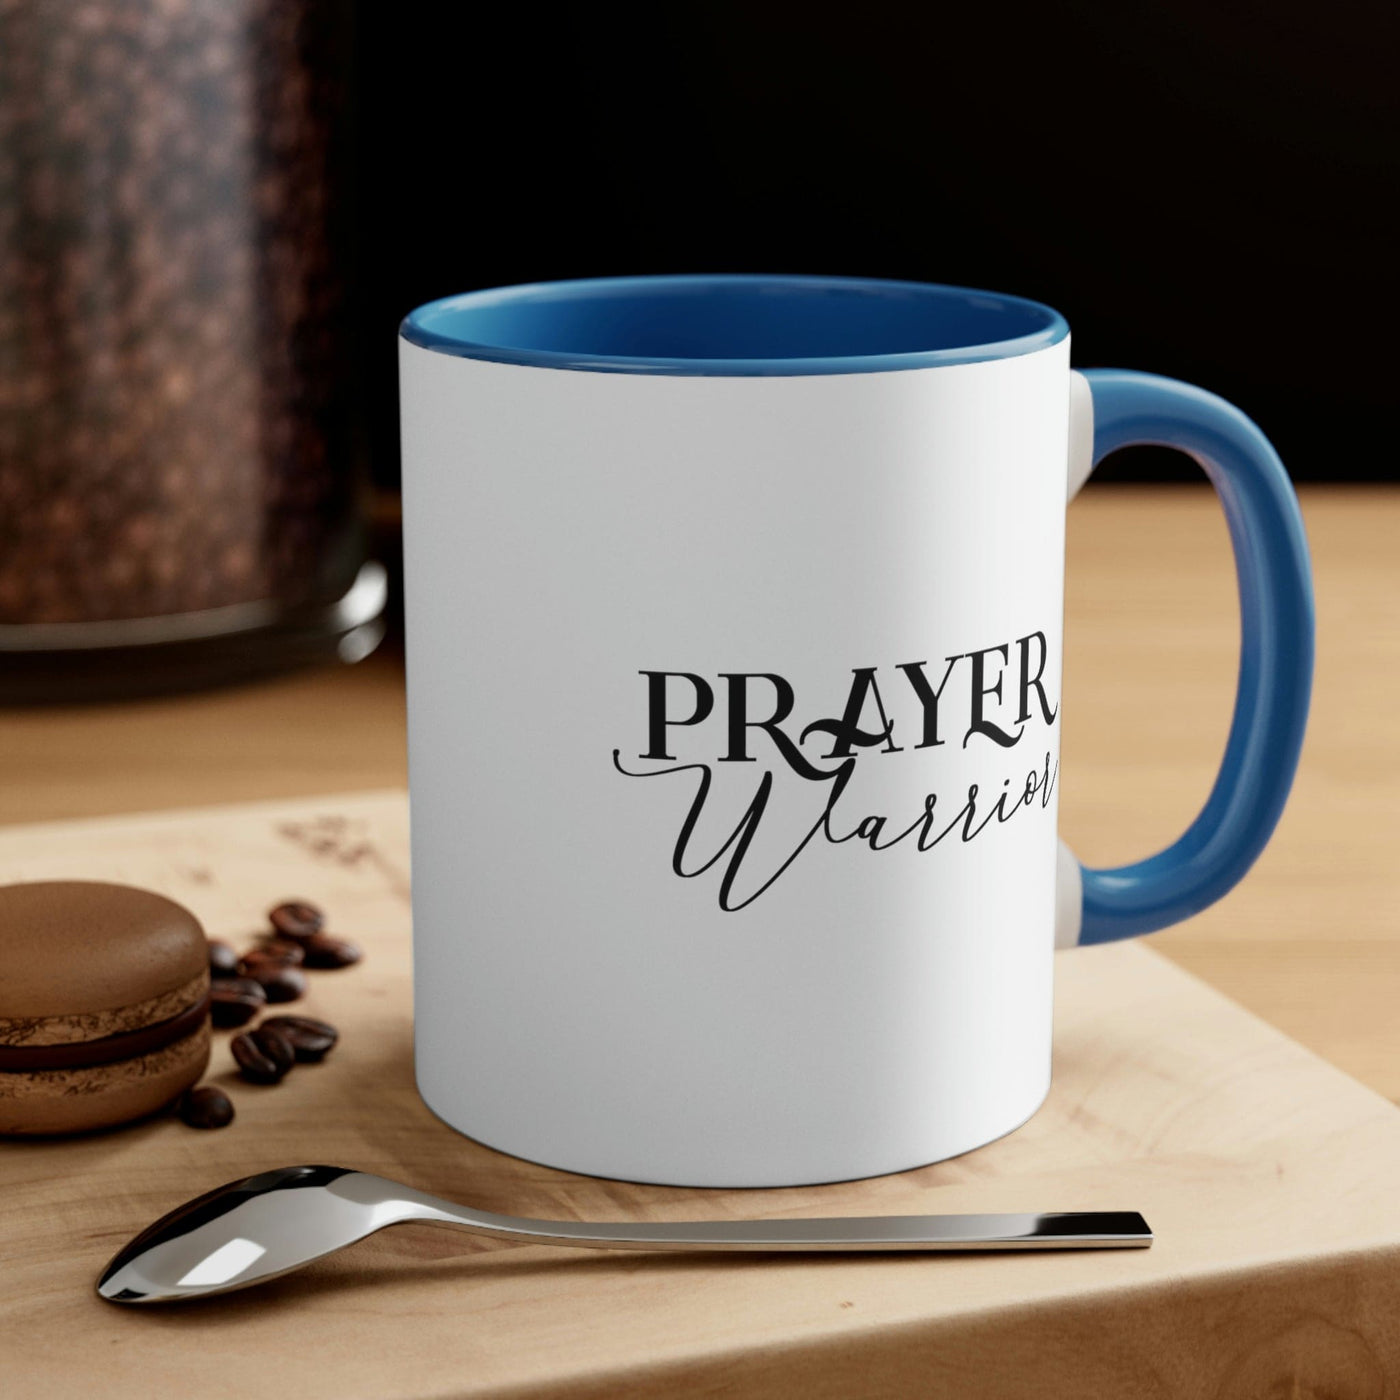 Two-tone Accent Ceramic Mug 11oz Prayer Warrior Illustration - Decorative